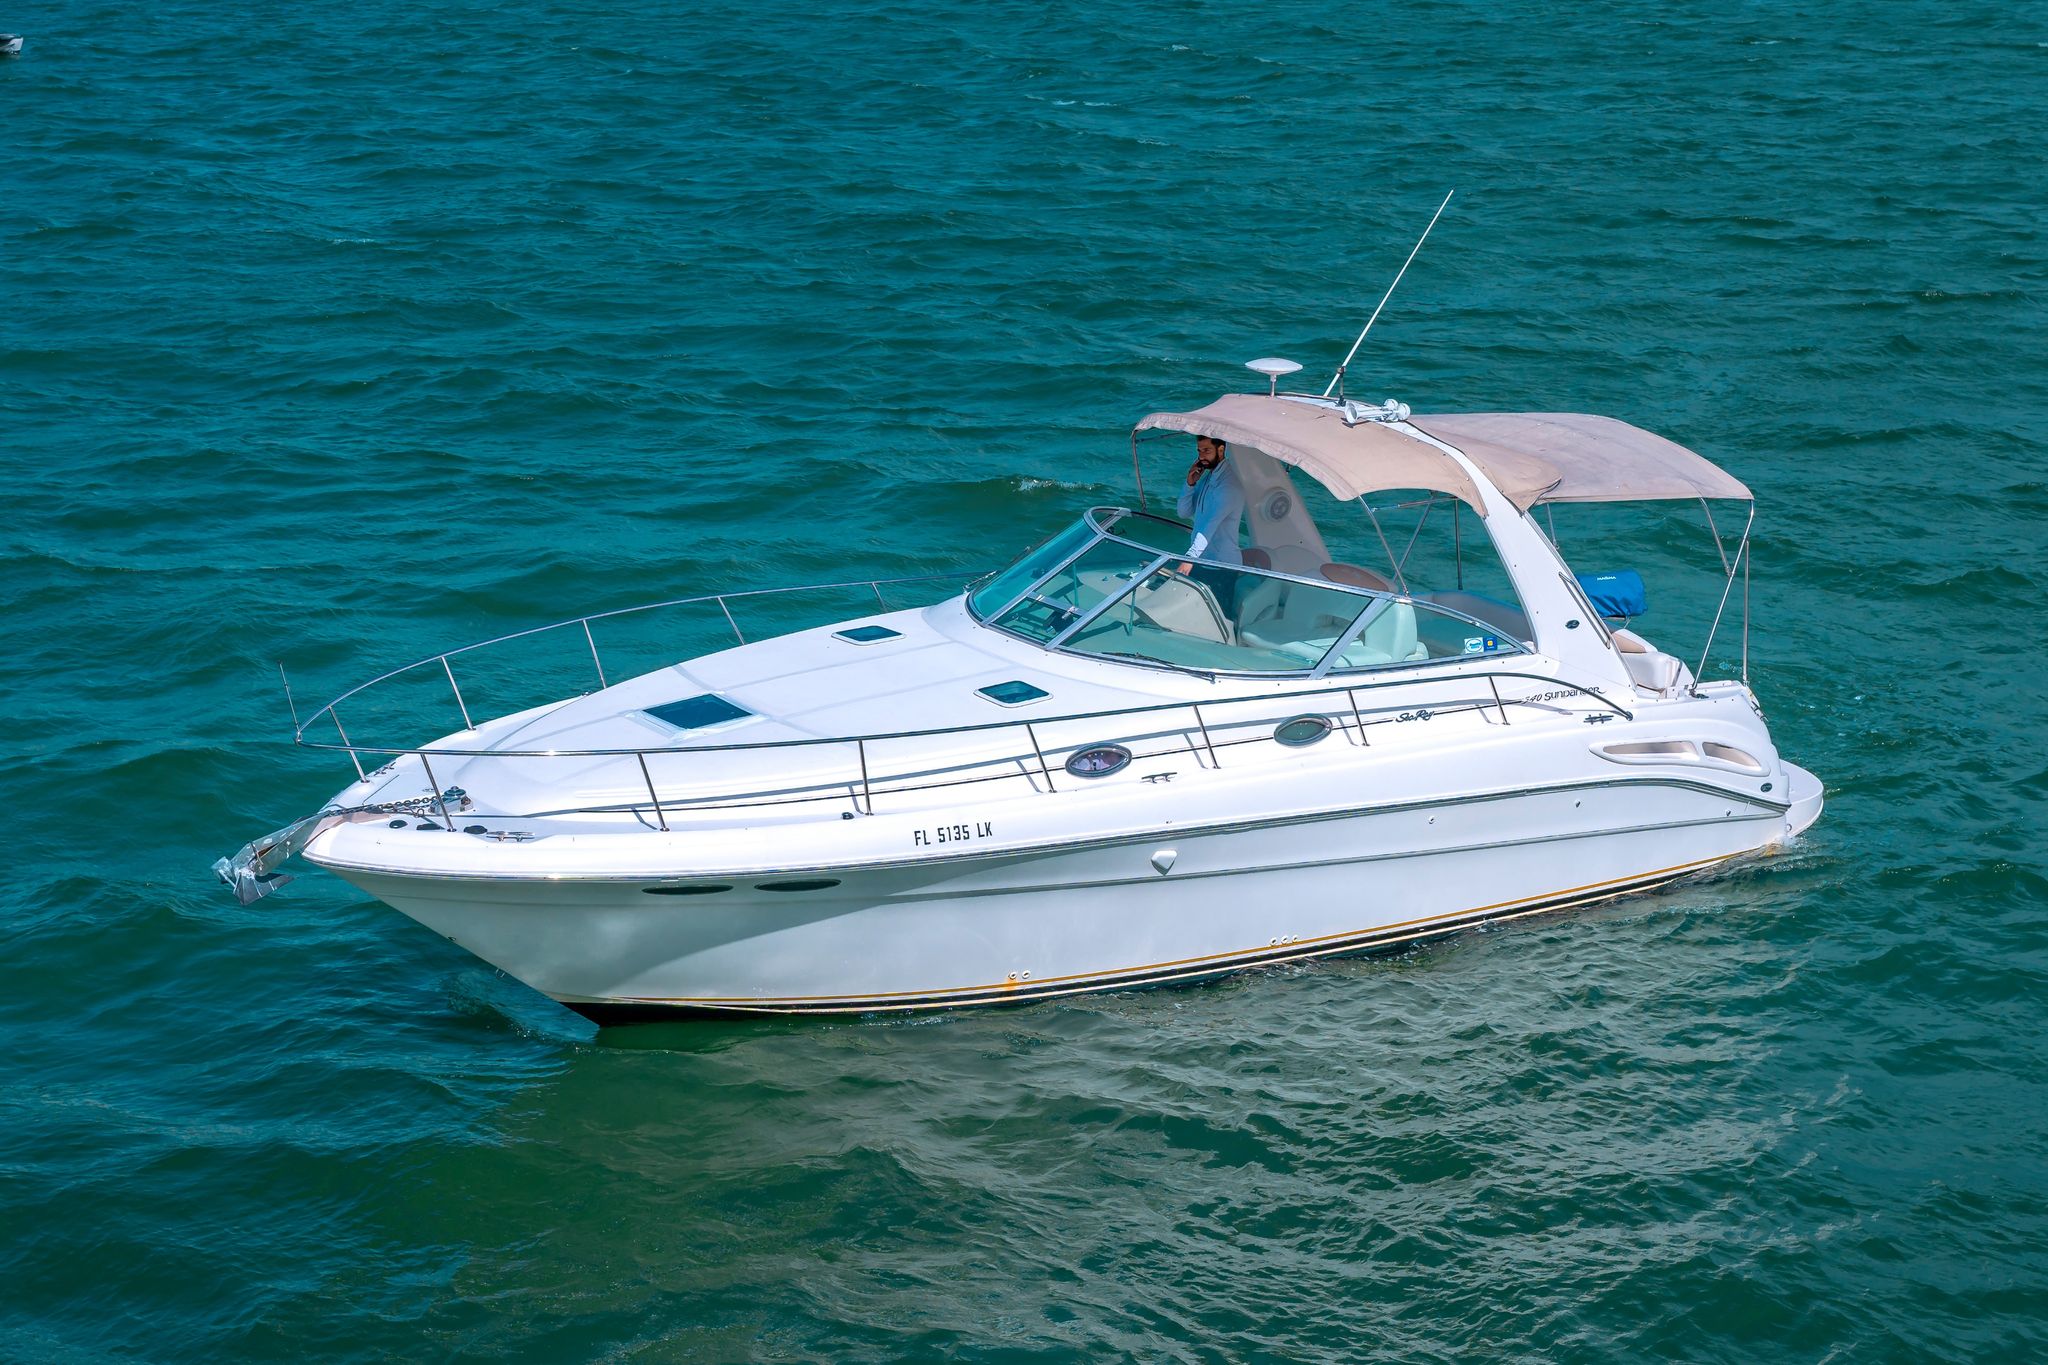 south florida yacht charter